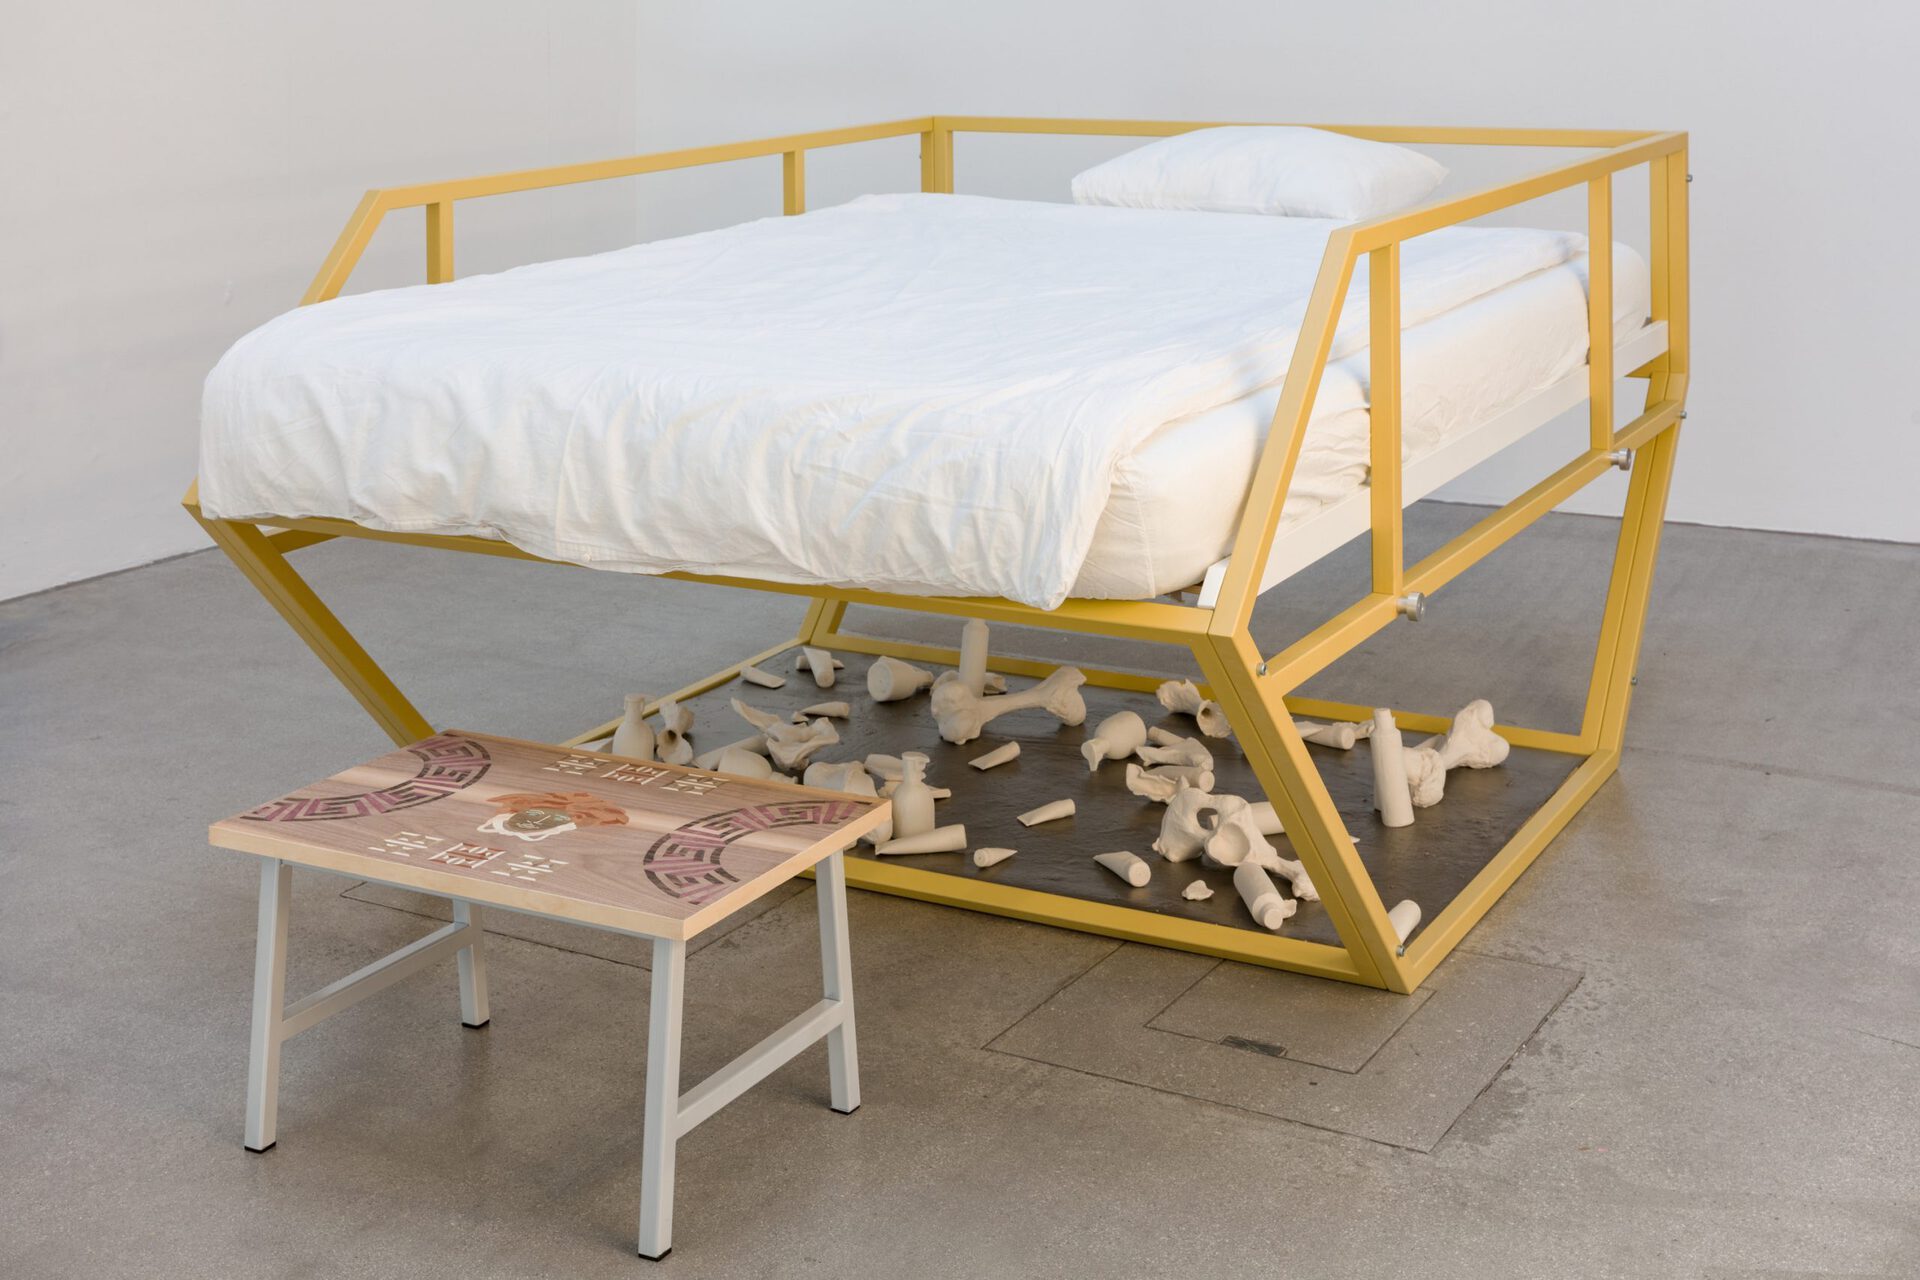 Gabriele Edlbauer, Rost Stinkt Rundum Muldenservice, 2015-2021, painted steel, ceramics, foam, fabric filler aluminium, mattress, cover, pillow, wood